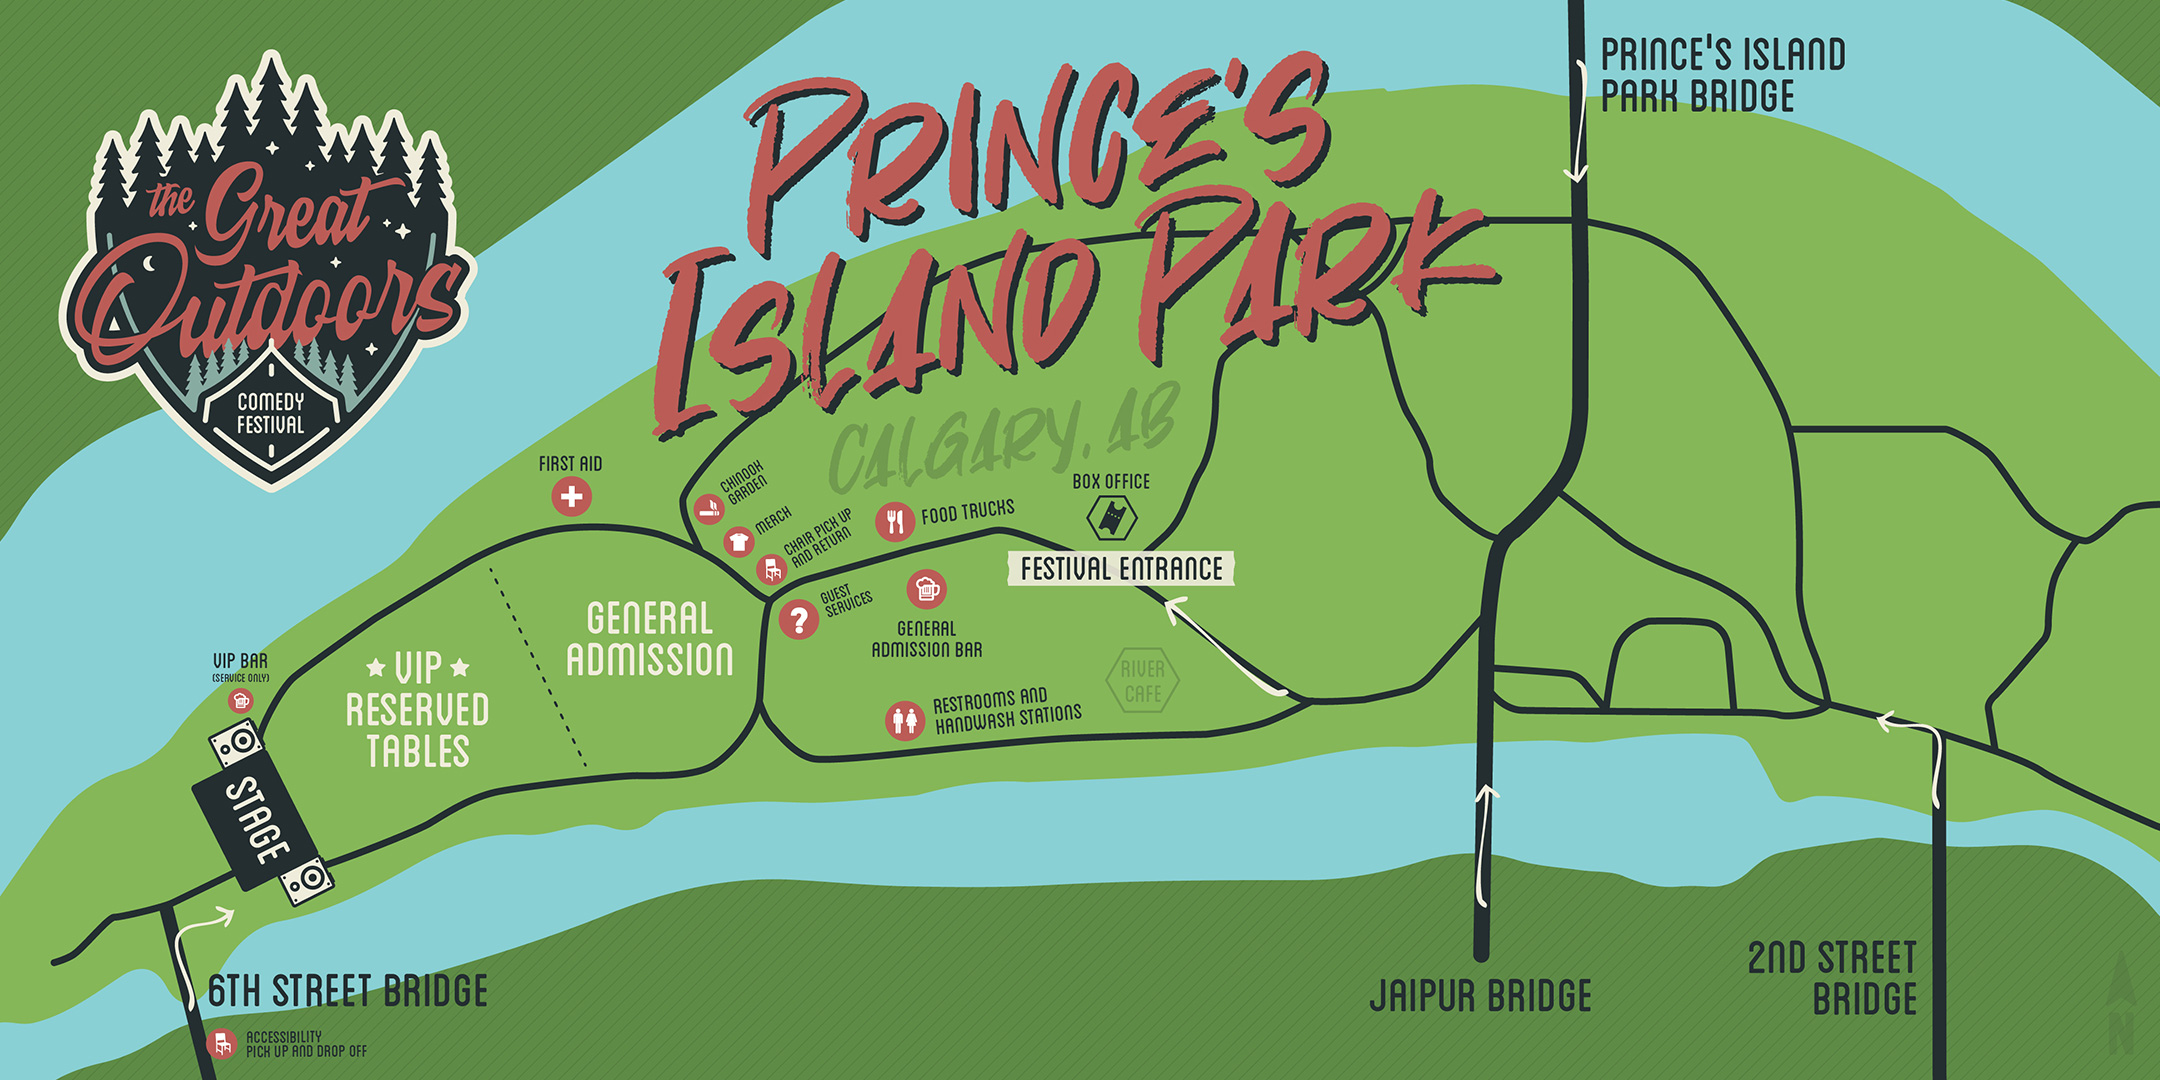 Prince's Island Park - The Great Outdoors Comedy Festival - Calgary, Alberta